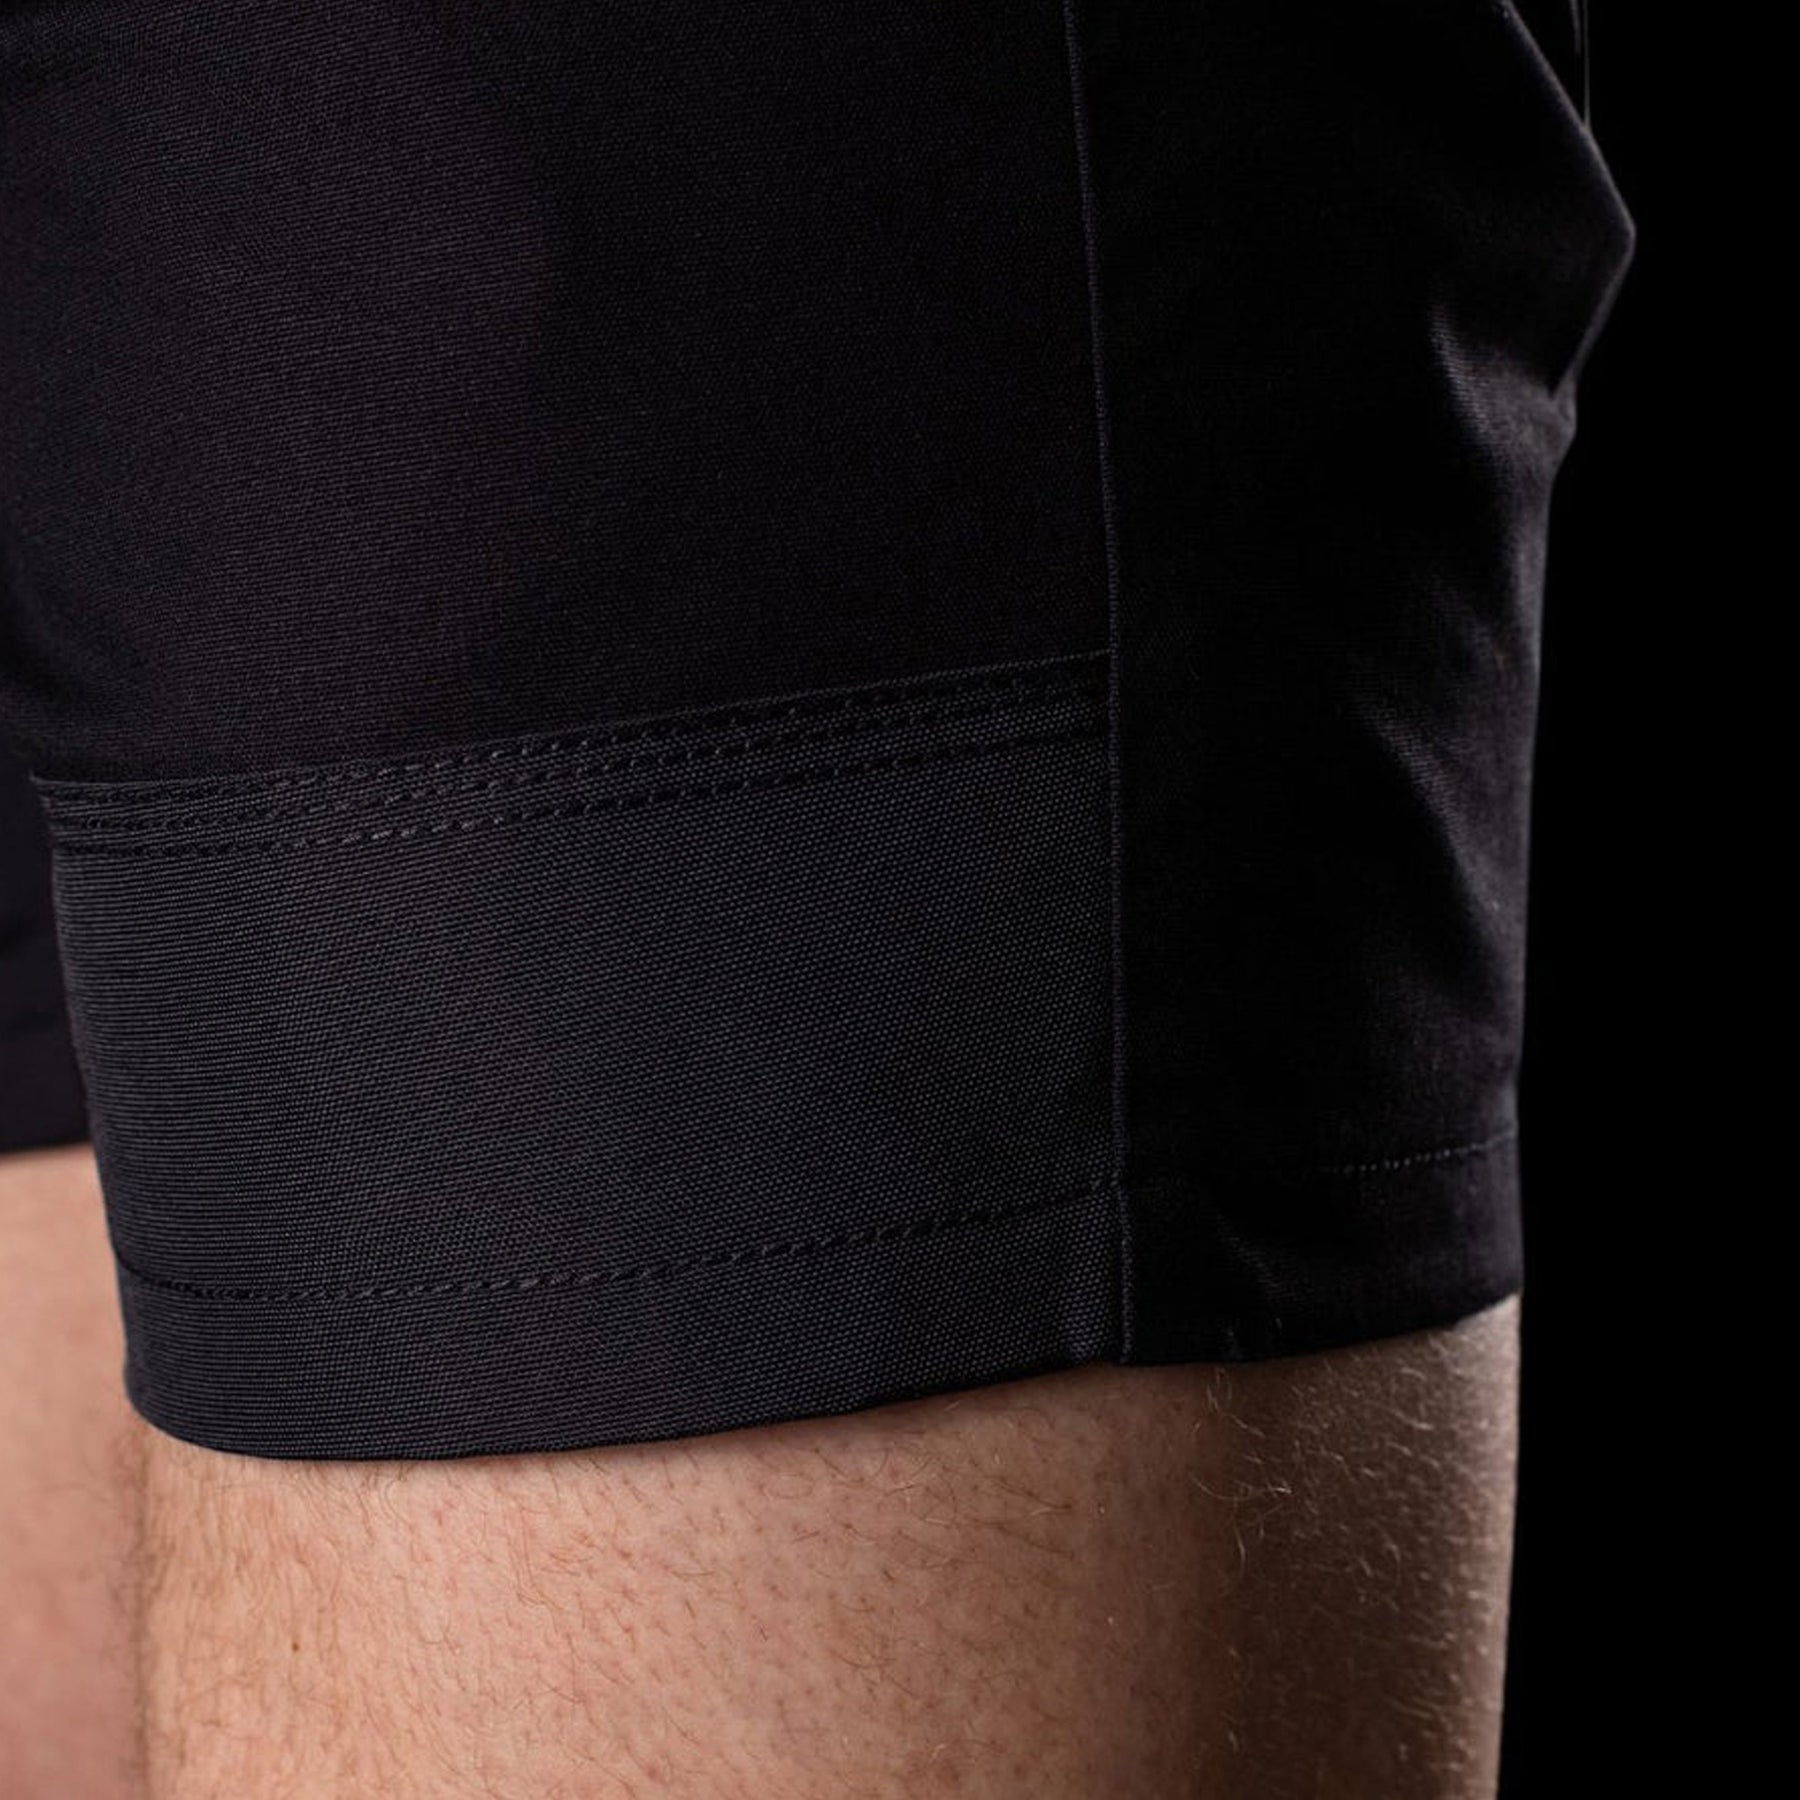 bad saviour pro elastic waist work short shorts in black